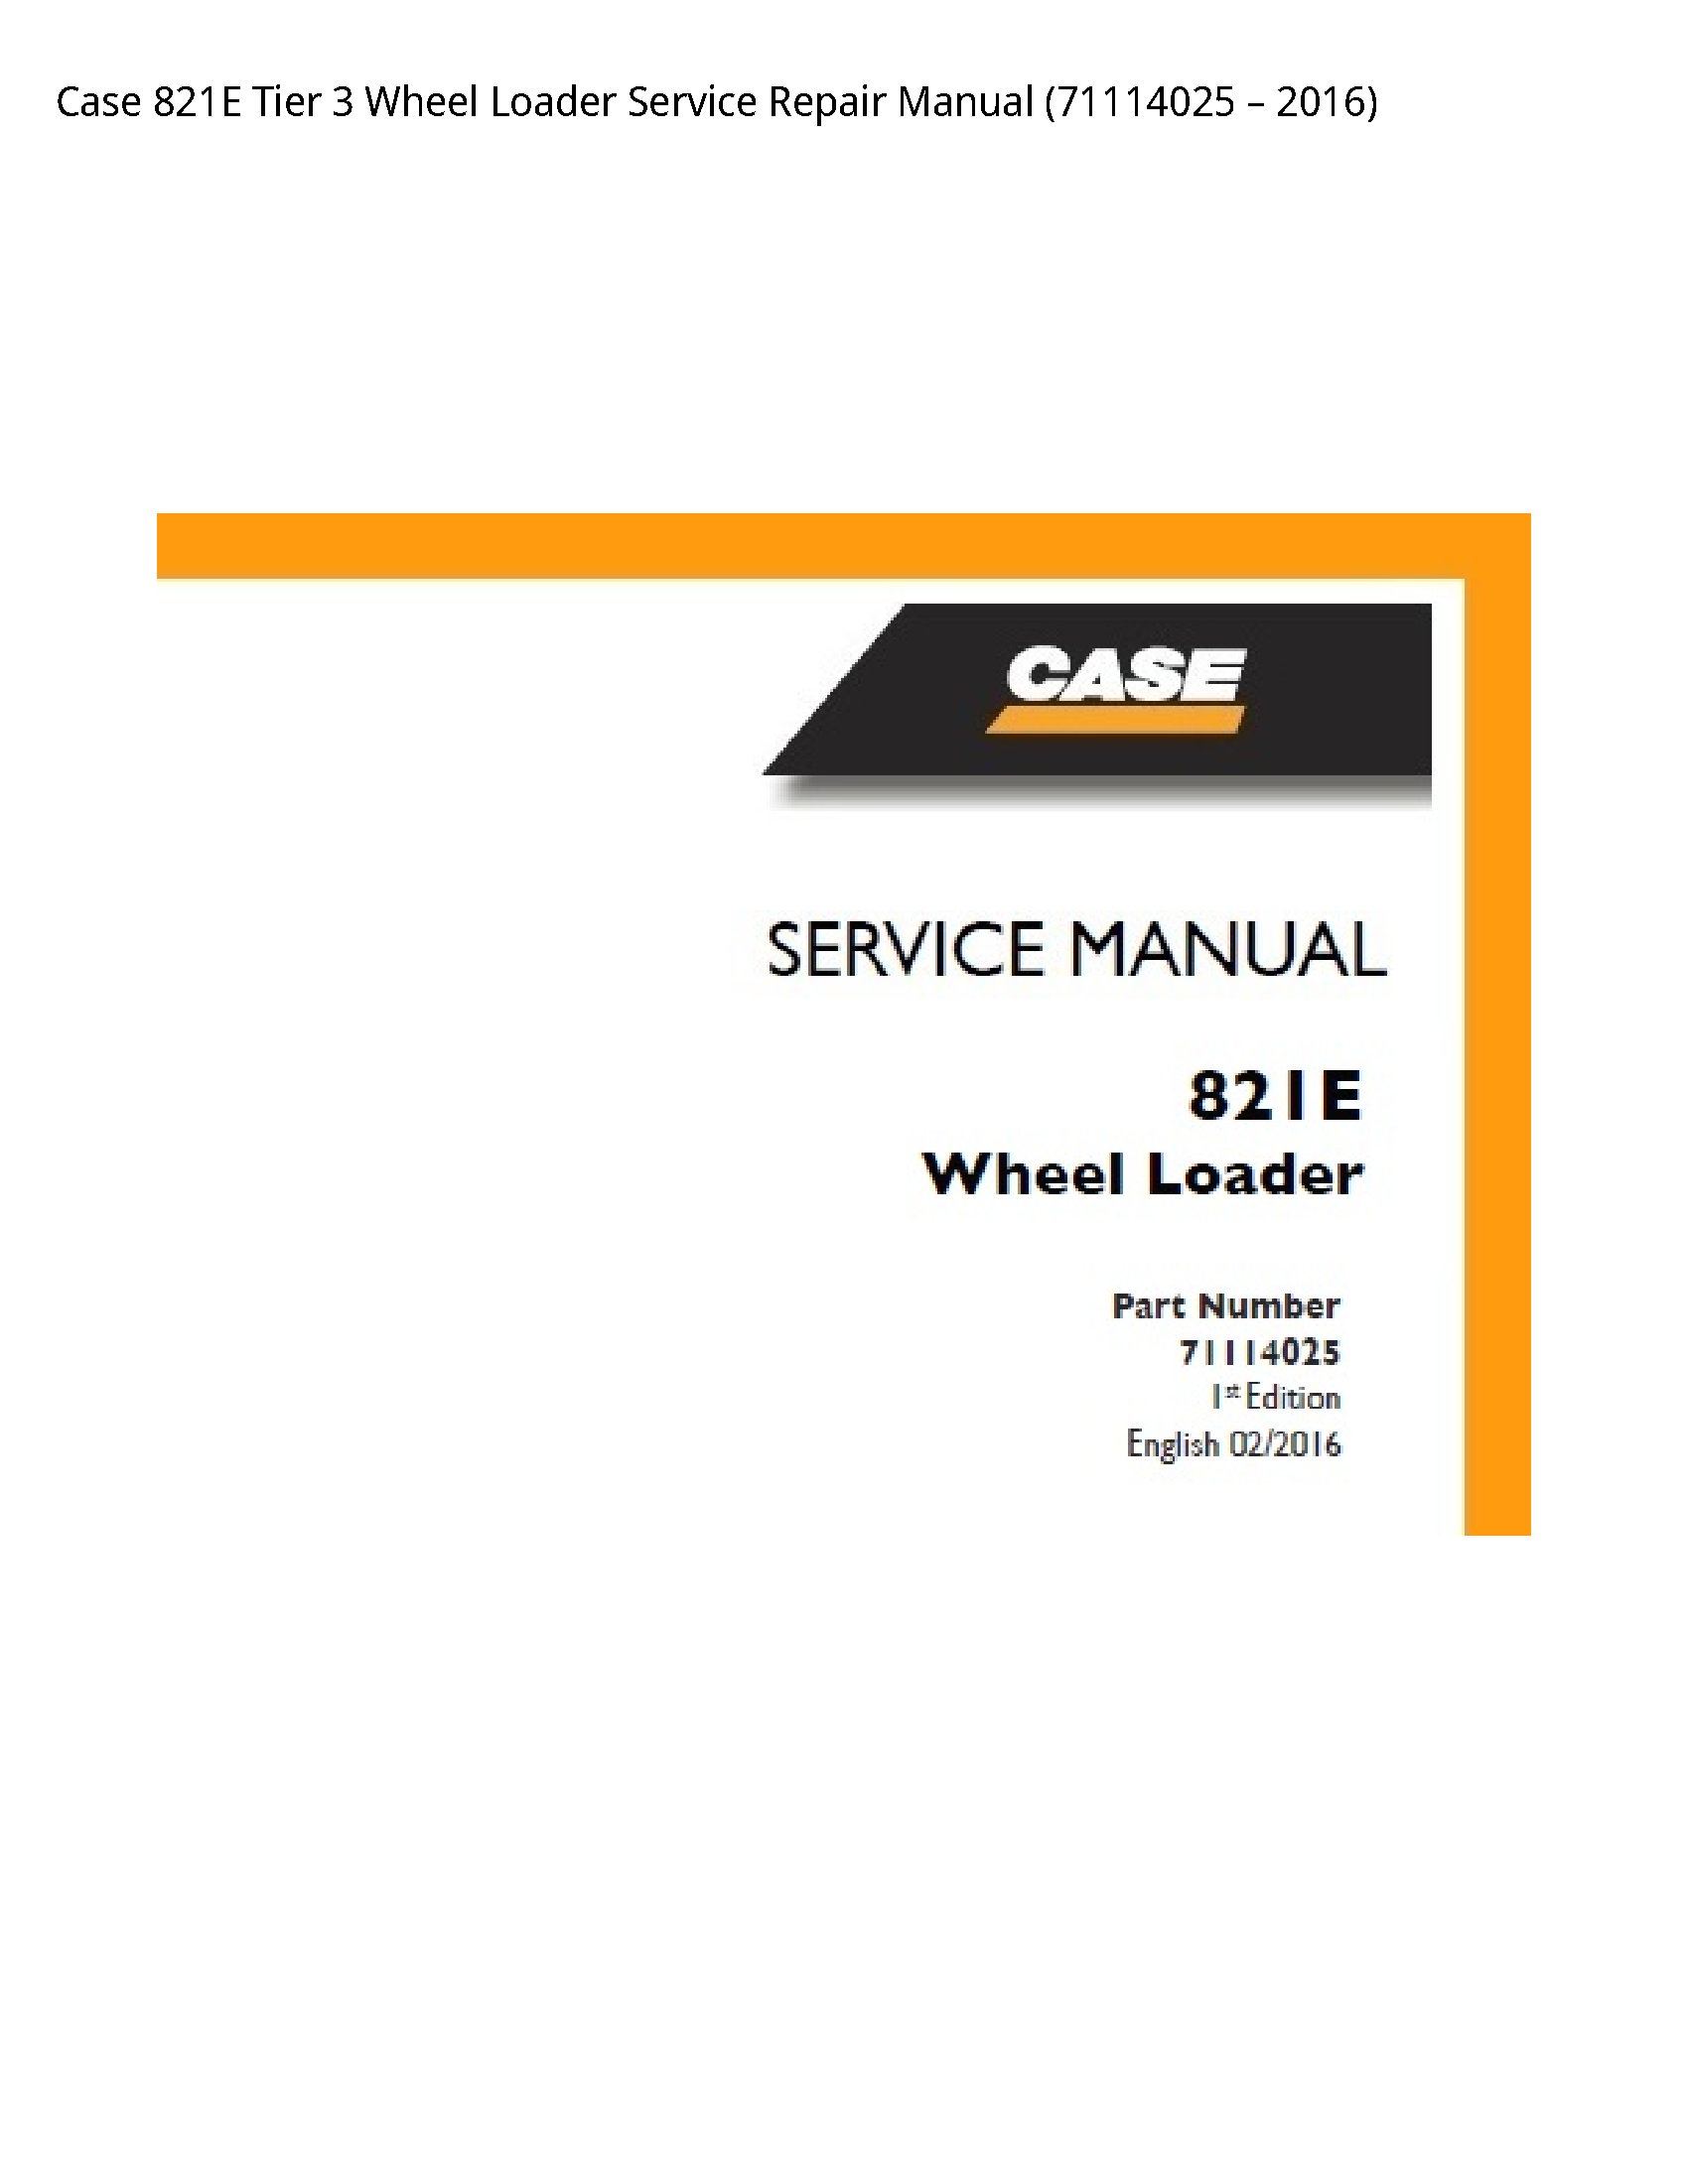 Case/Case IH 821E Tier Wheel Loader manual